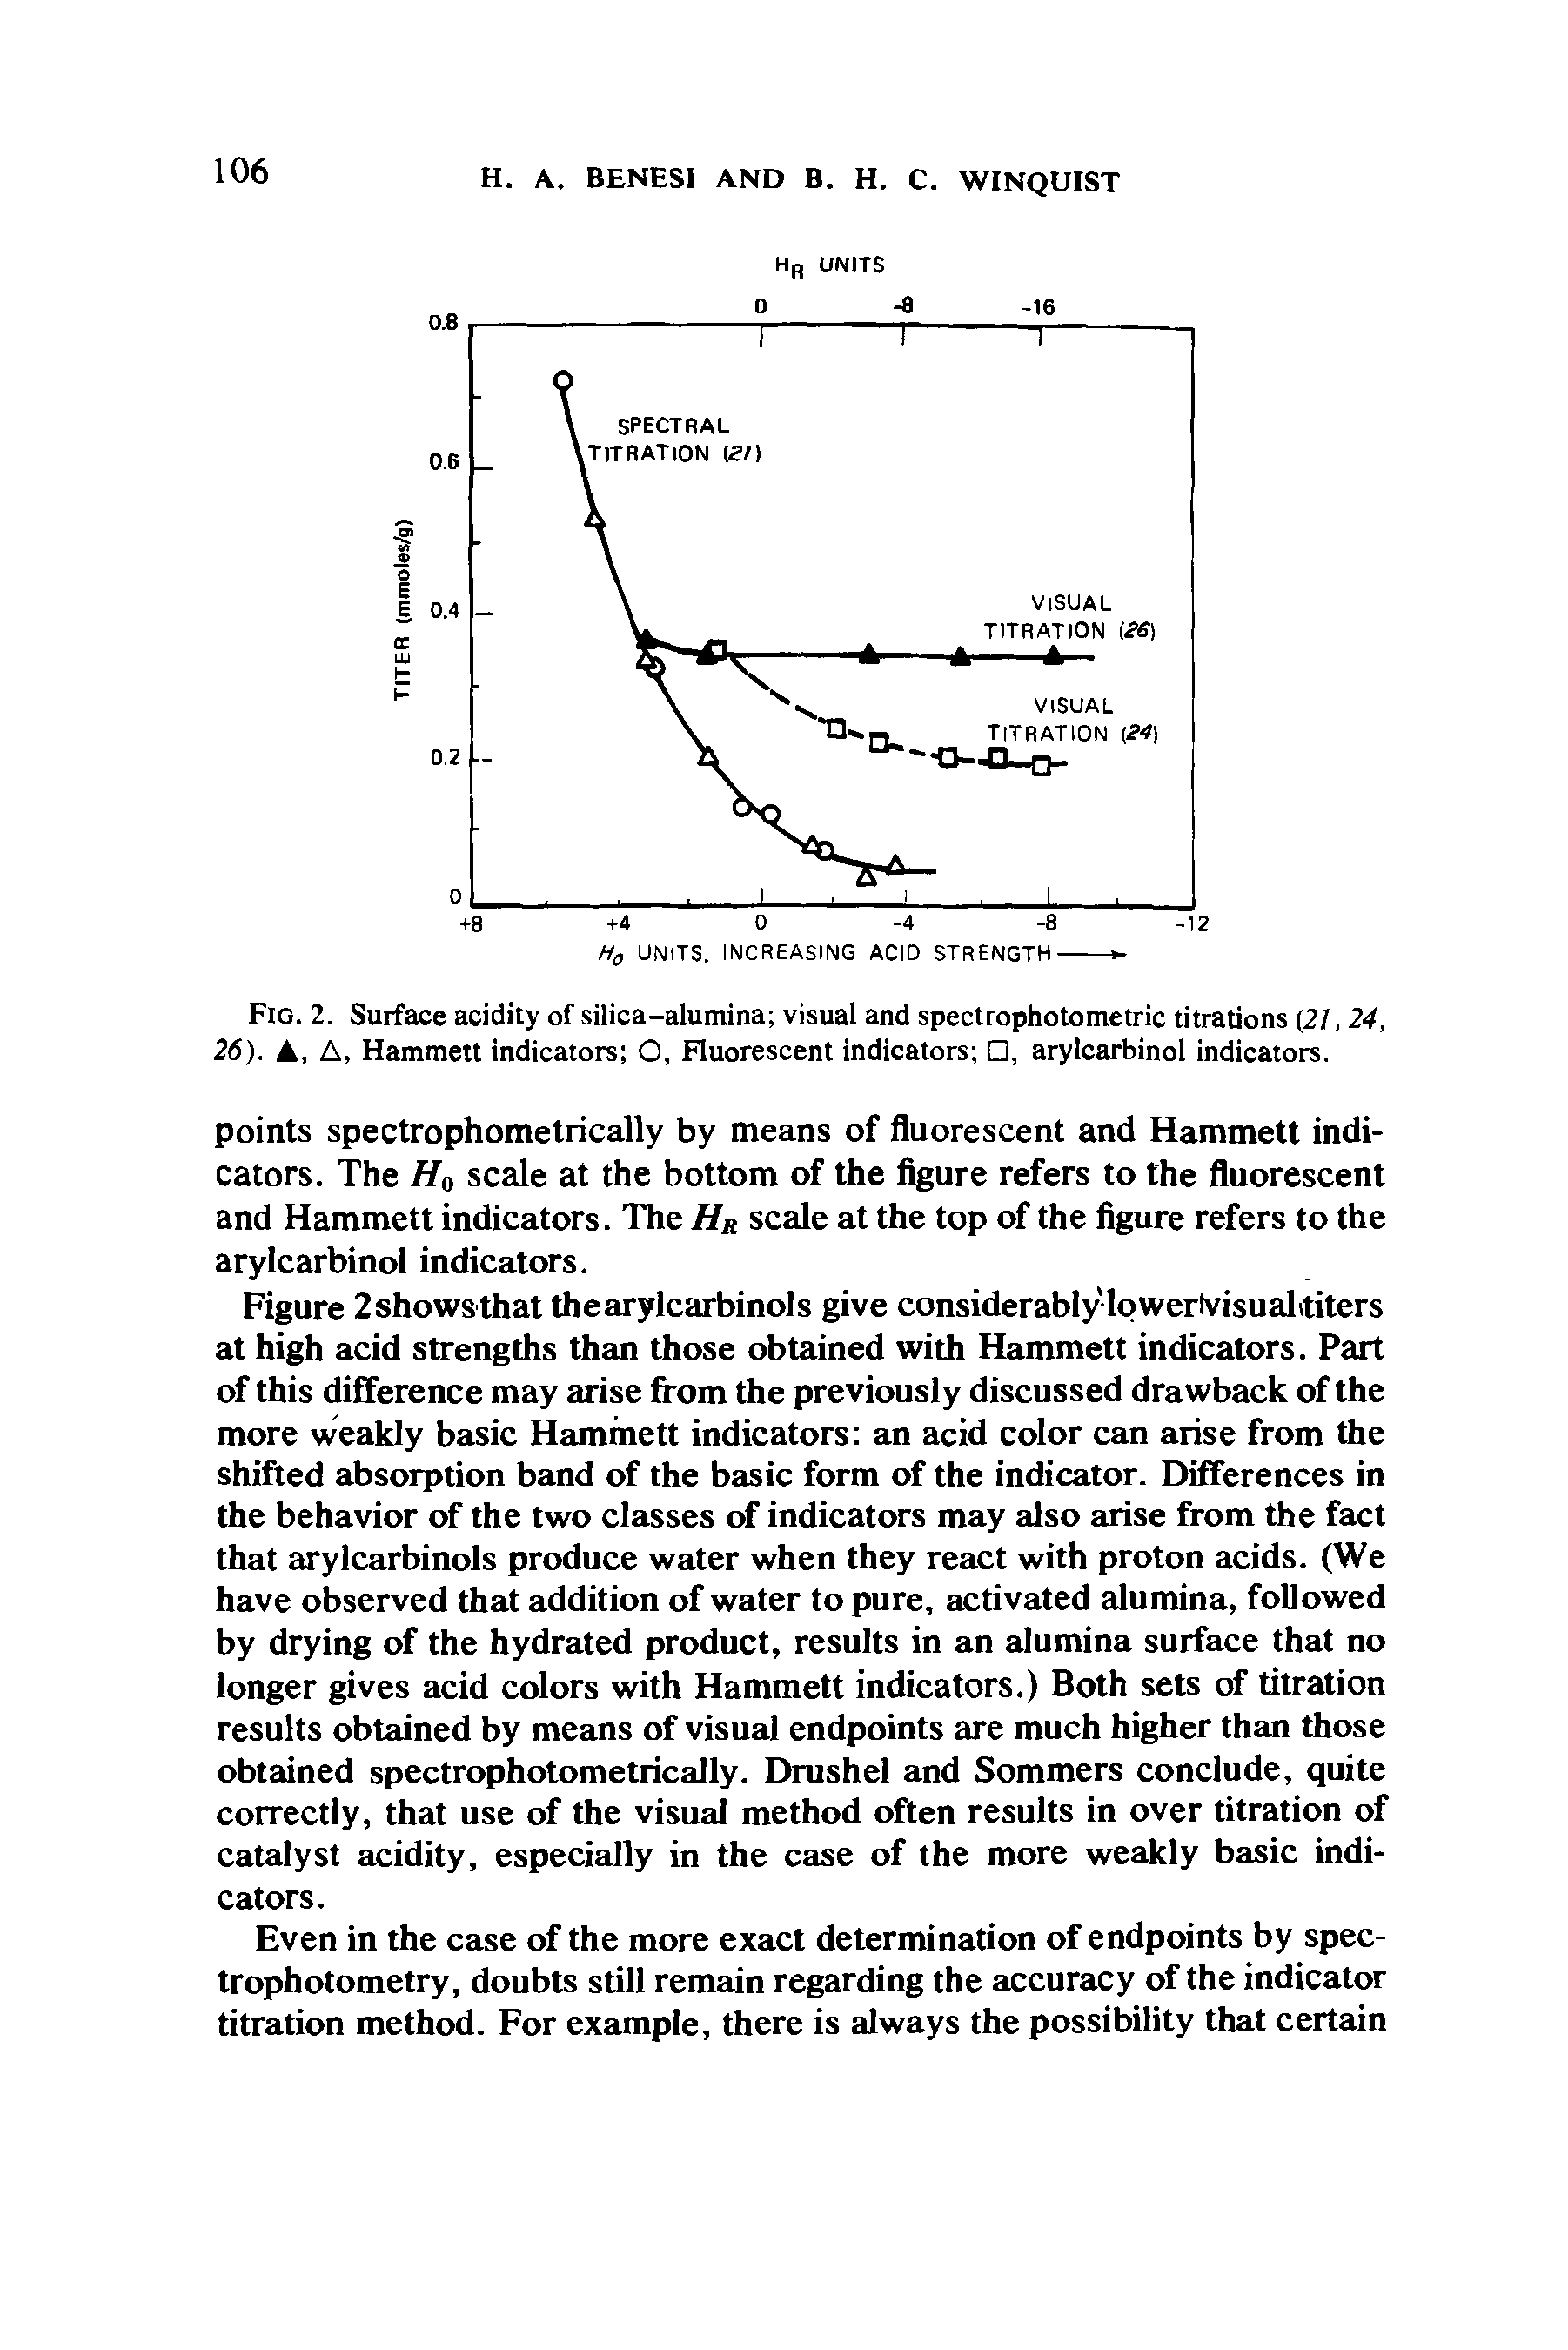 Fig. 2. Surface acidity of silica-alumina visual and spectrophotometric titrations (21, 24, 26). , A, Hammett indicators O, Fluorescent indicators , arylcarbinol indicators.